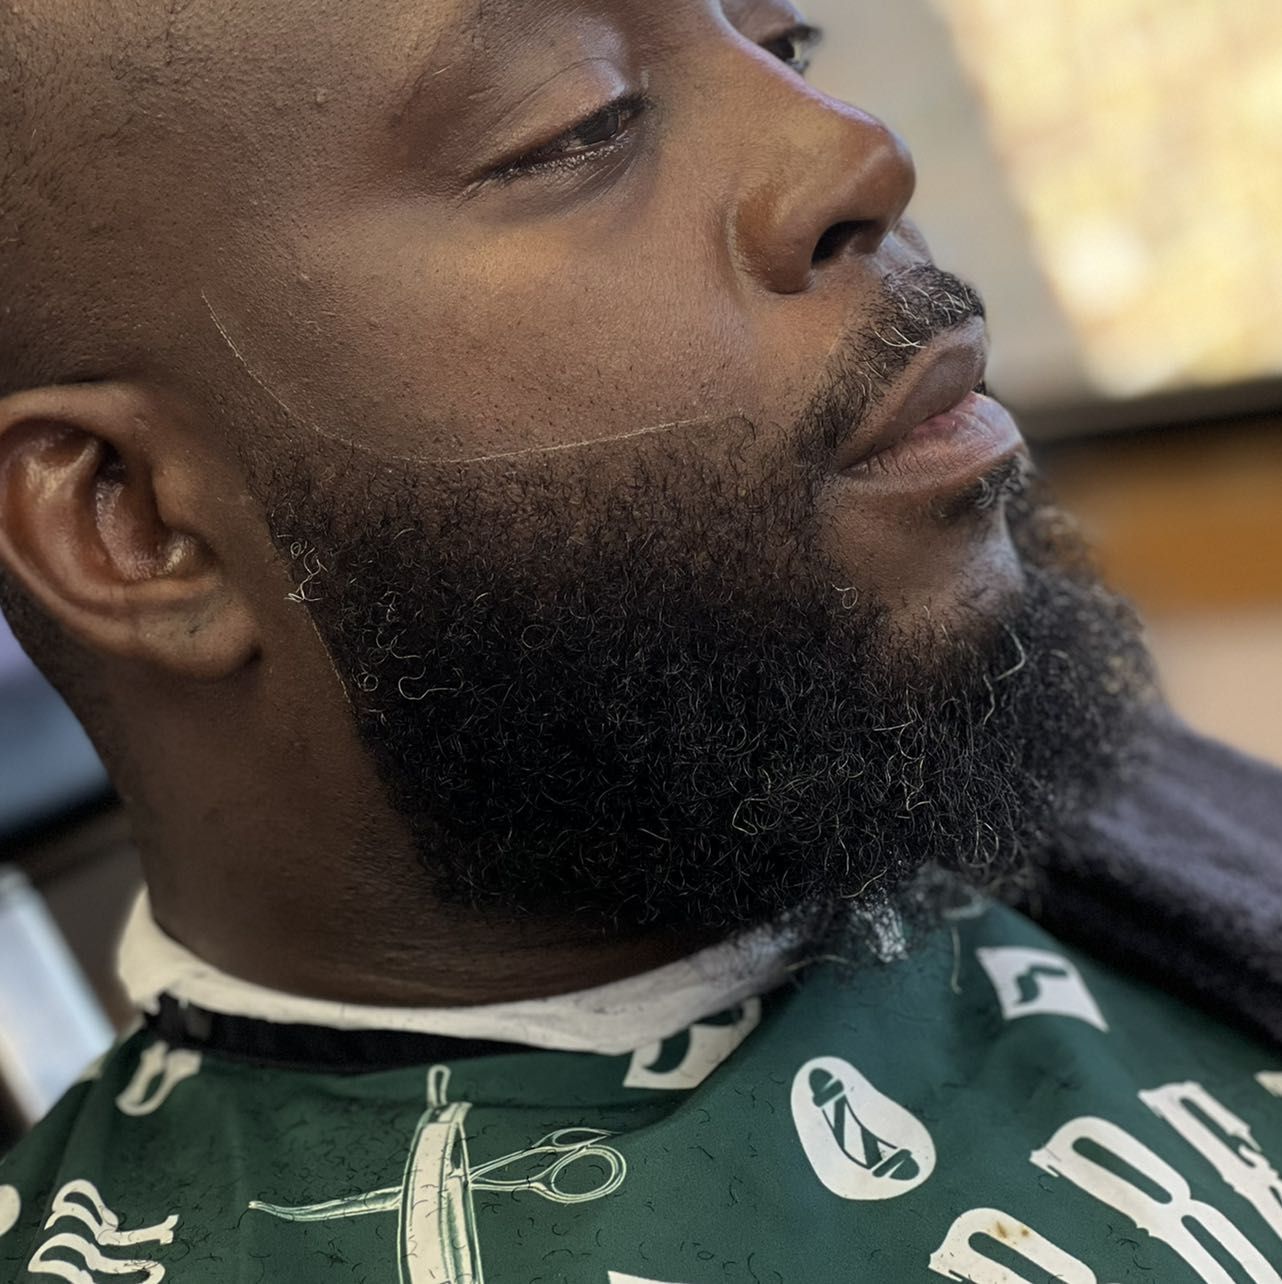 Head Shave + Beard Lining portfolio